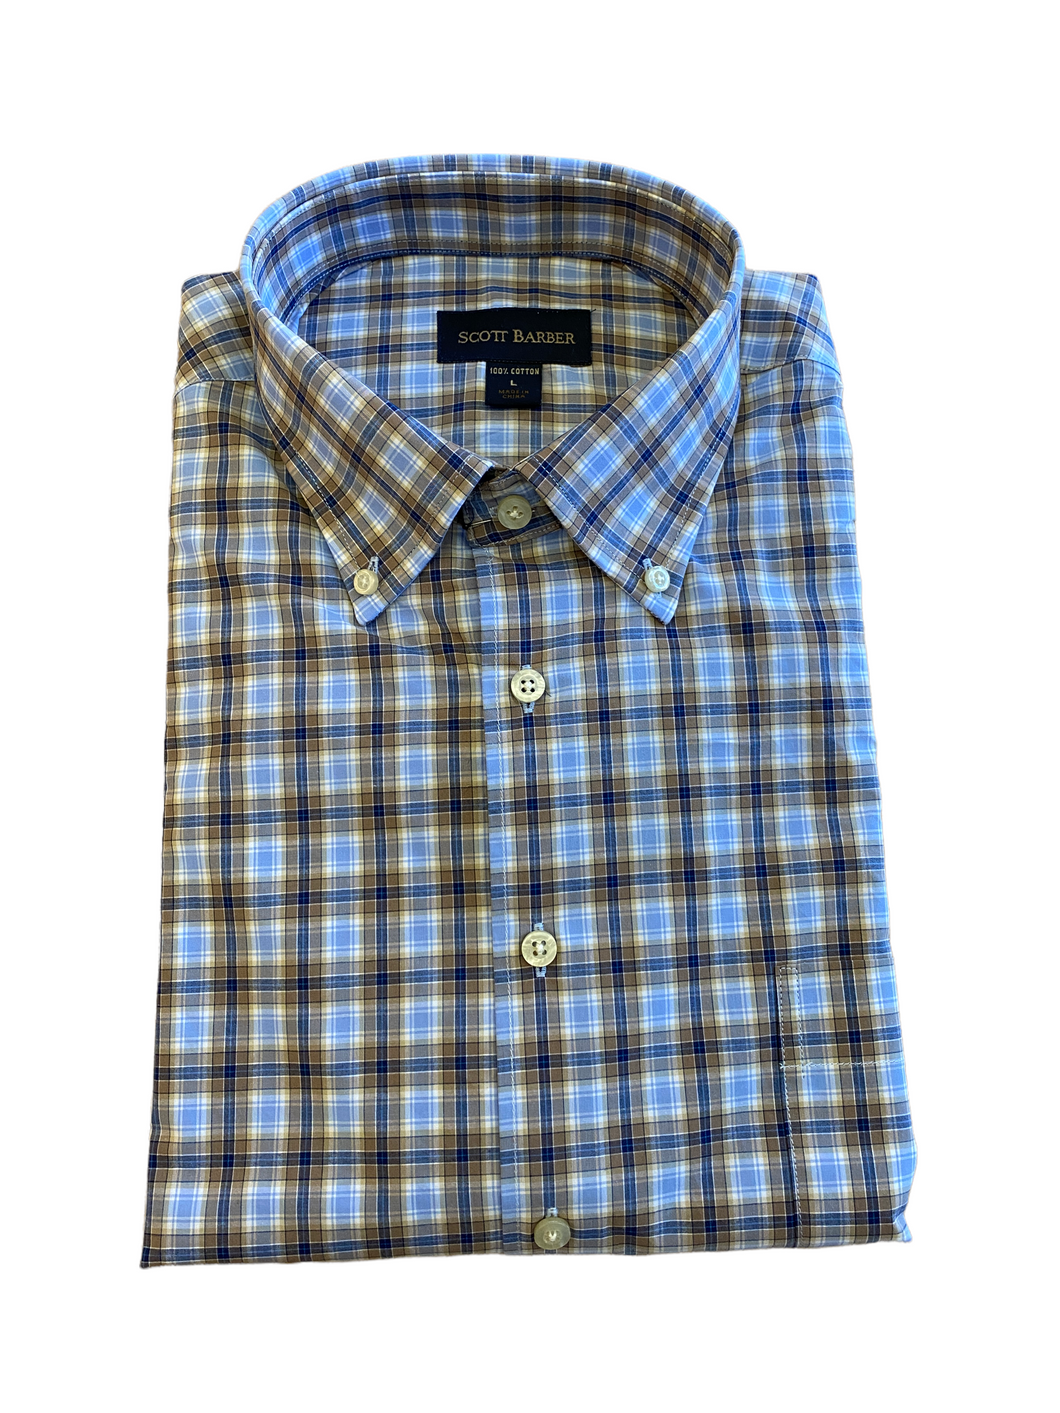 Scott Barber Classic BD Cotton Shirt Blue and Brown Plaid